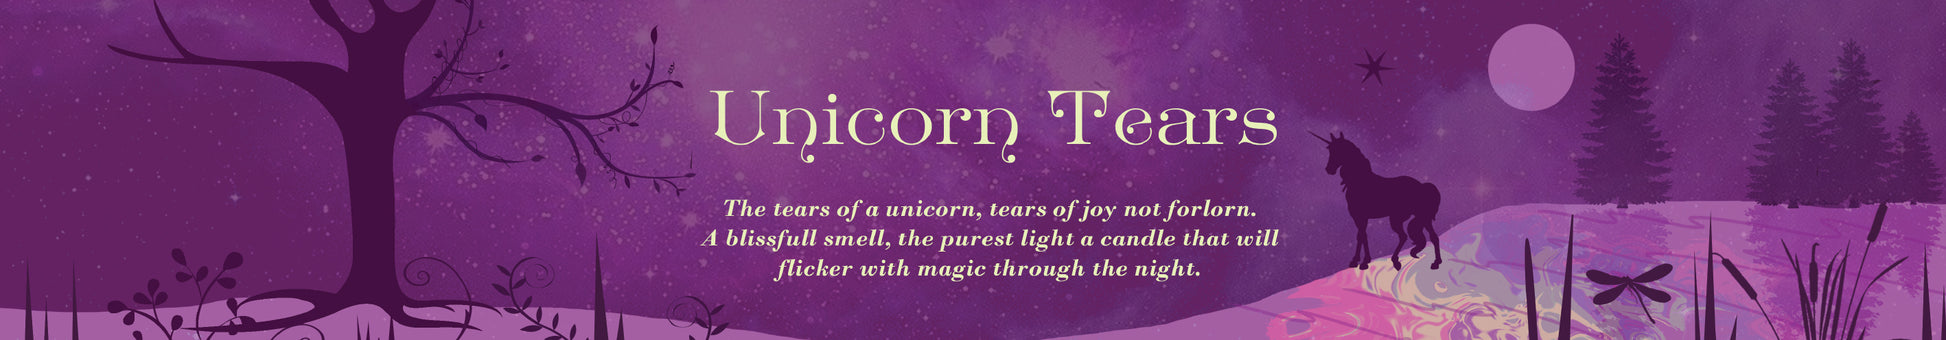 Unicorn tears scented candle label design | Happy Piranha.